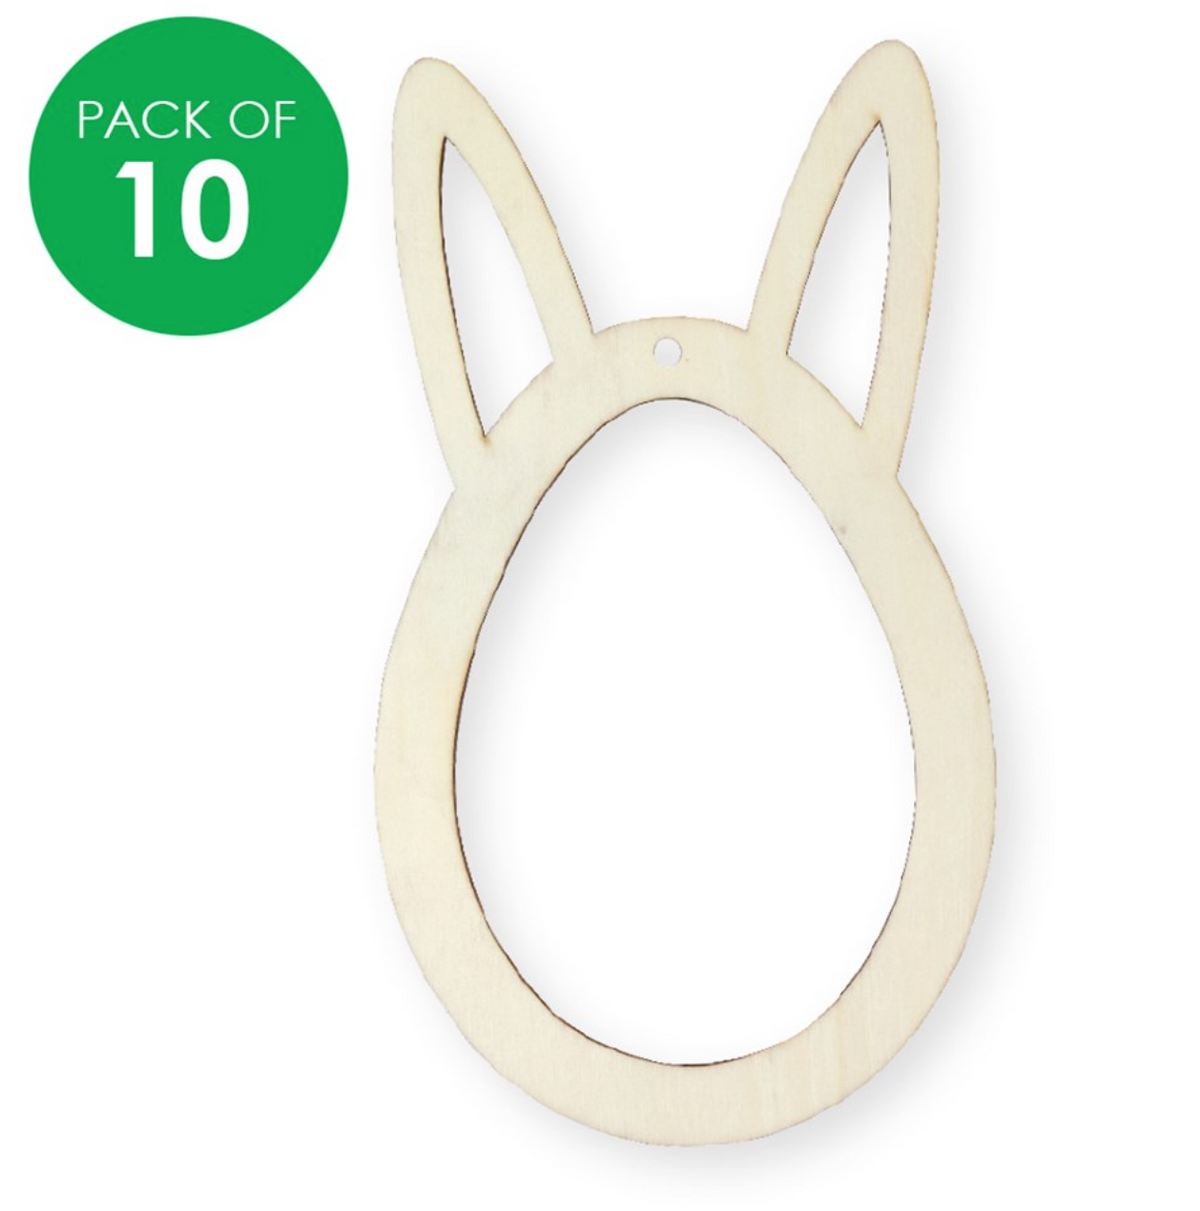 Wooden Easter Egg Bunny Frames - Pack of 10